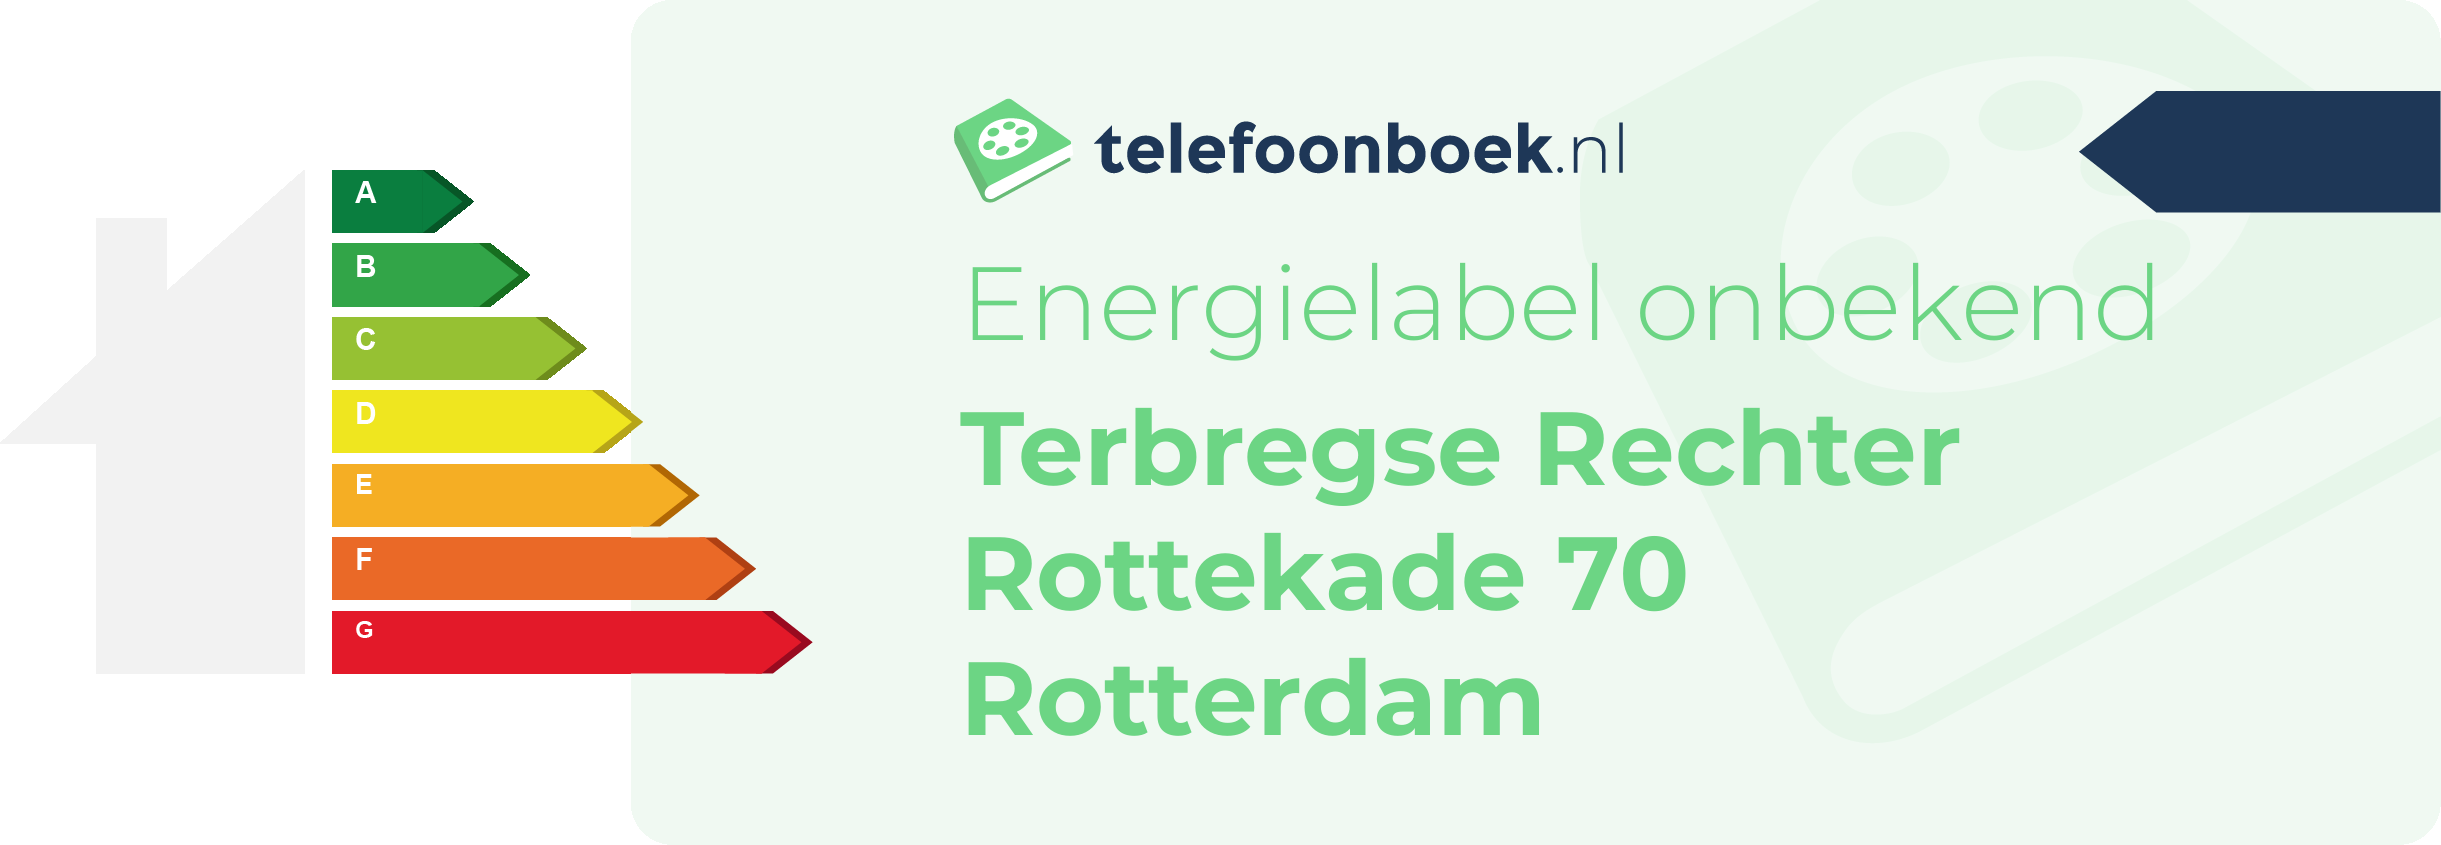 Energielabel Terbregse Rechter Rottekade 70 Rotterdam